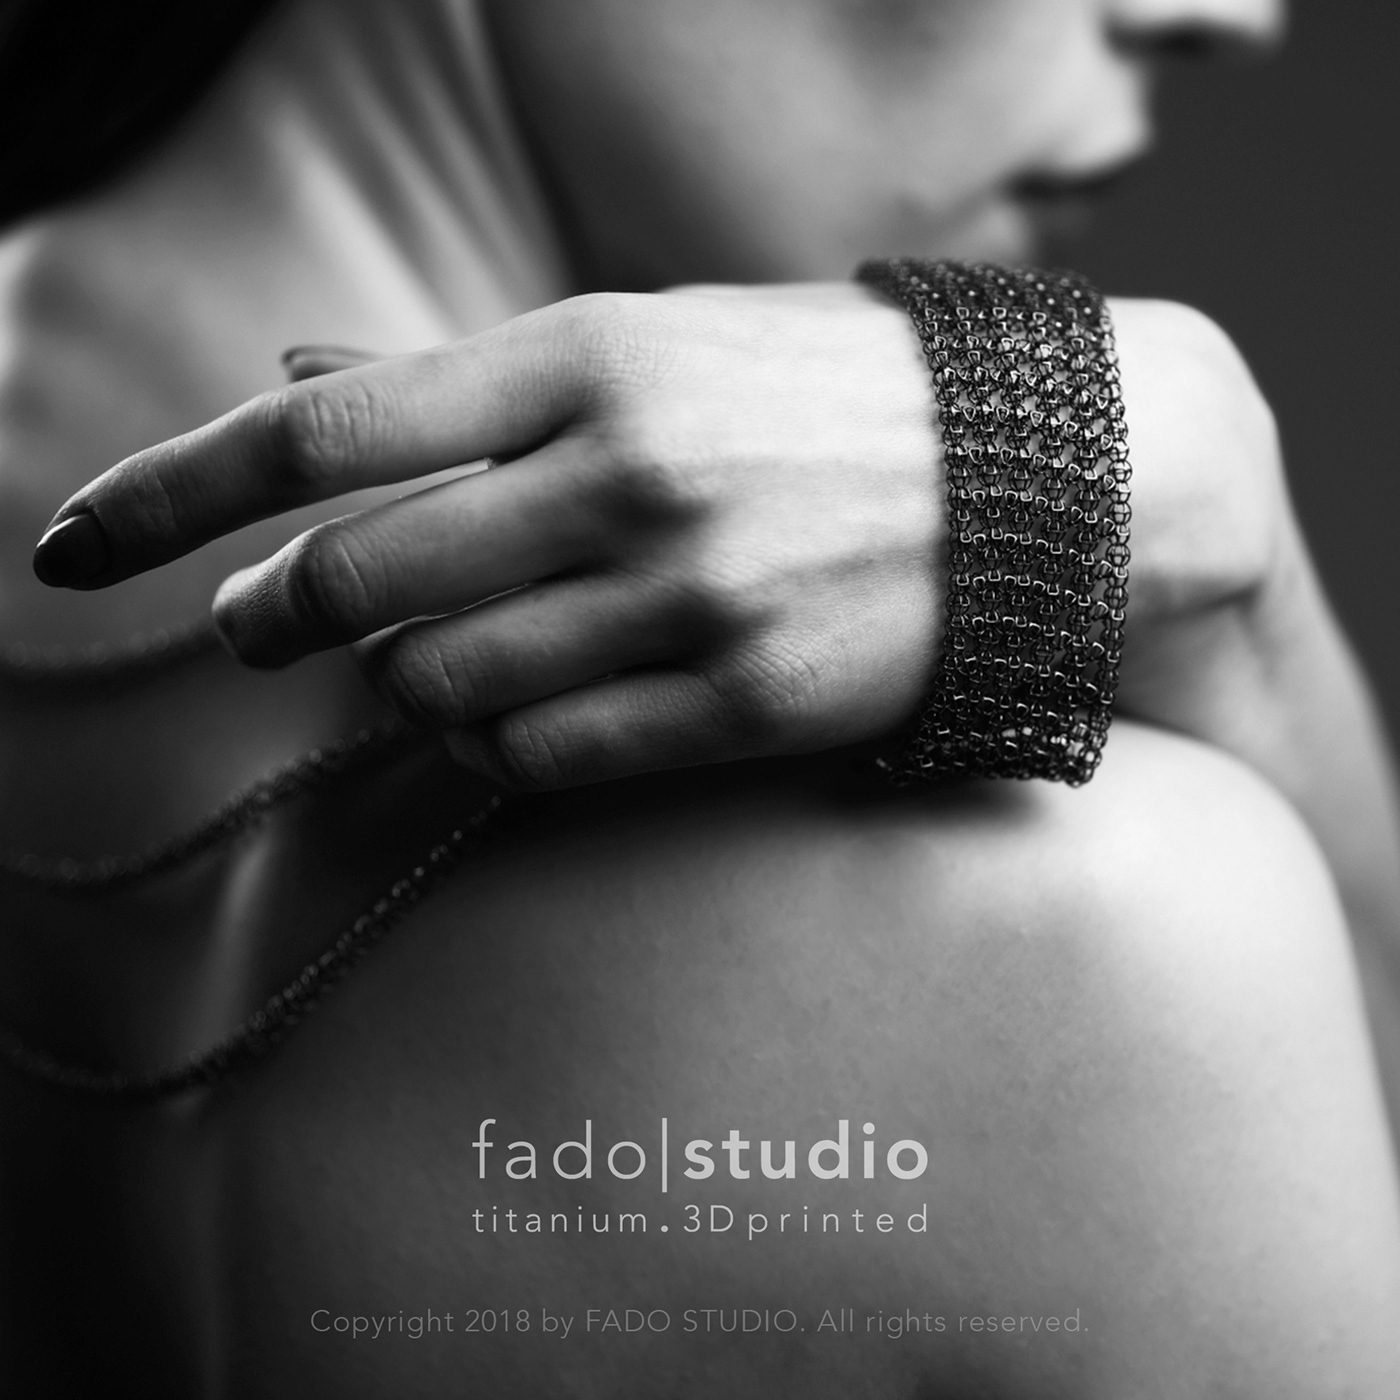 fadostudio fado studio 3d printed Titanium metal printing dmls cyberorganic jewelry Jewellery